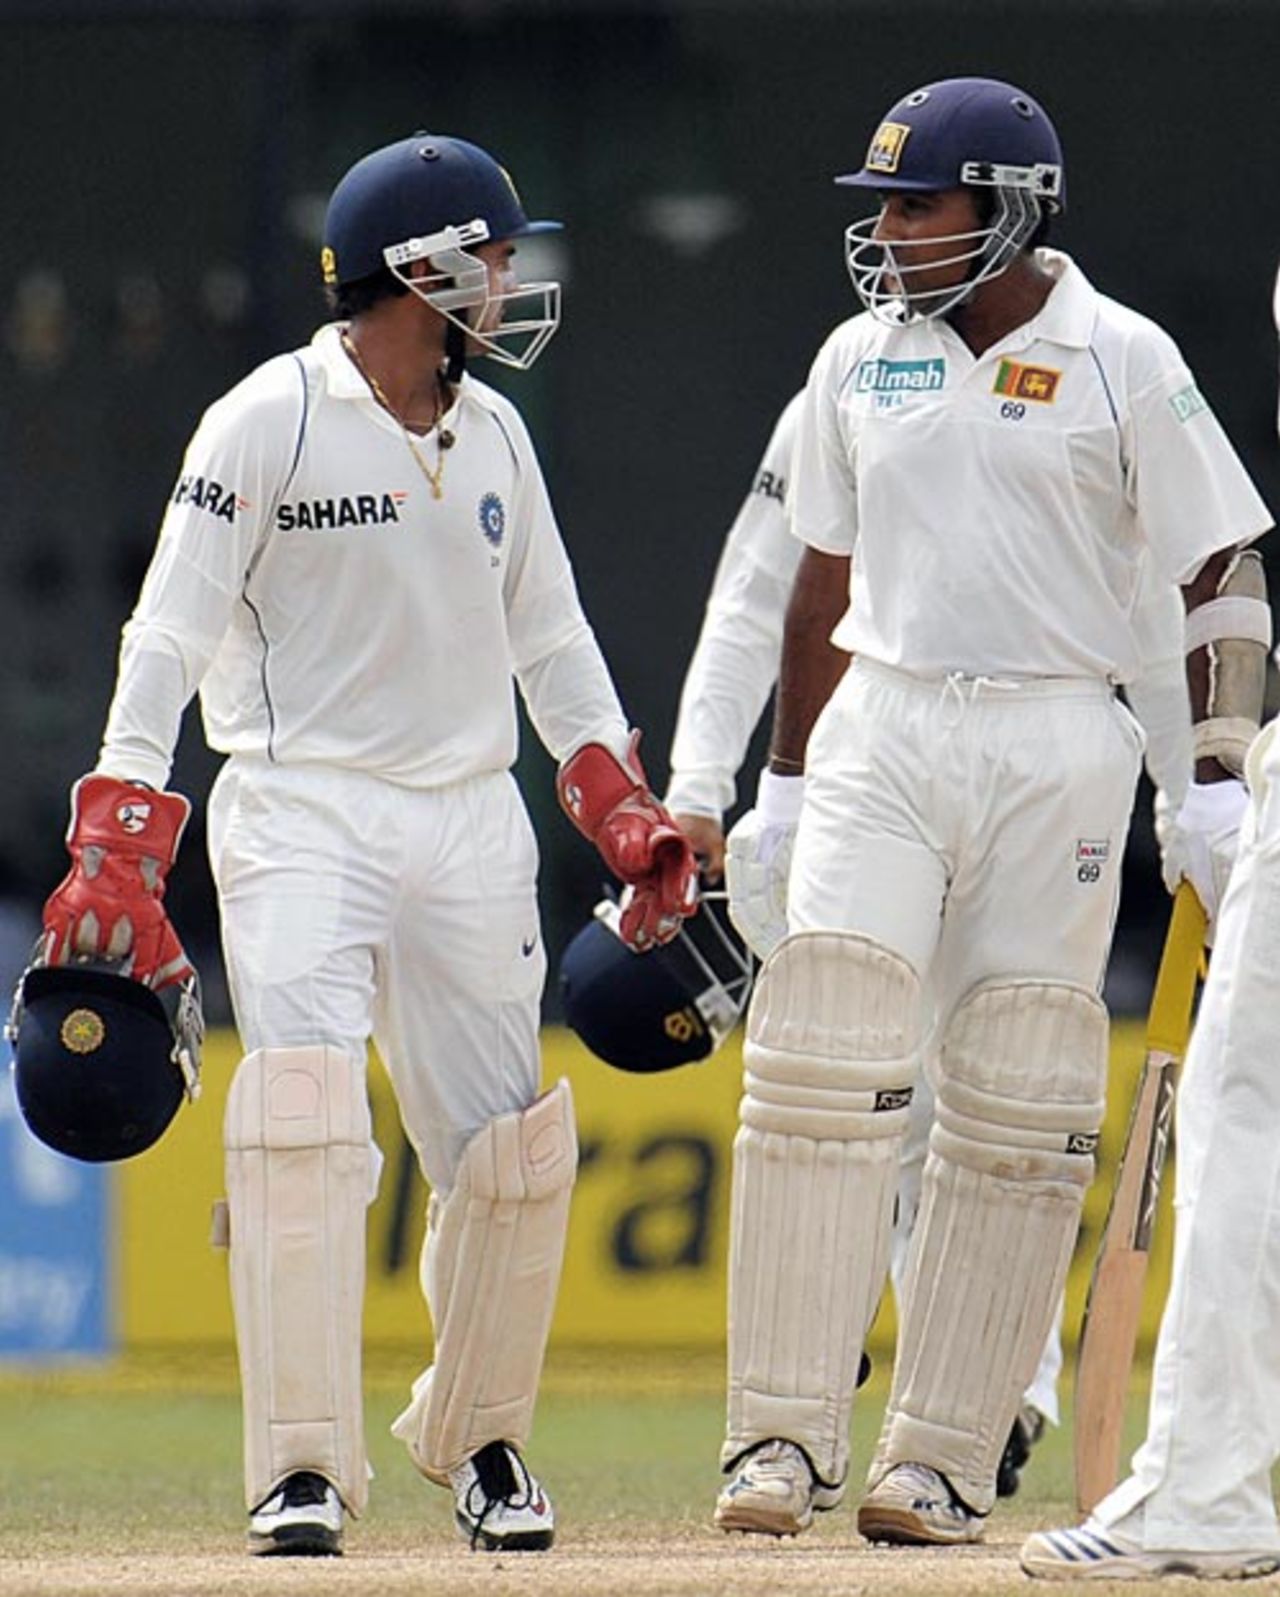 Mahela Jayawardene, Parthiv Patel exchange words, Sri Lanka v India, 3rd Test, PSS, Colombo, 4th day, August 11, 2008